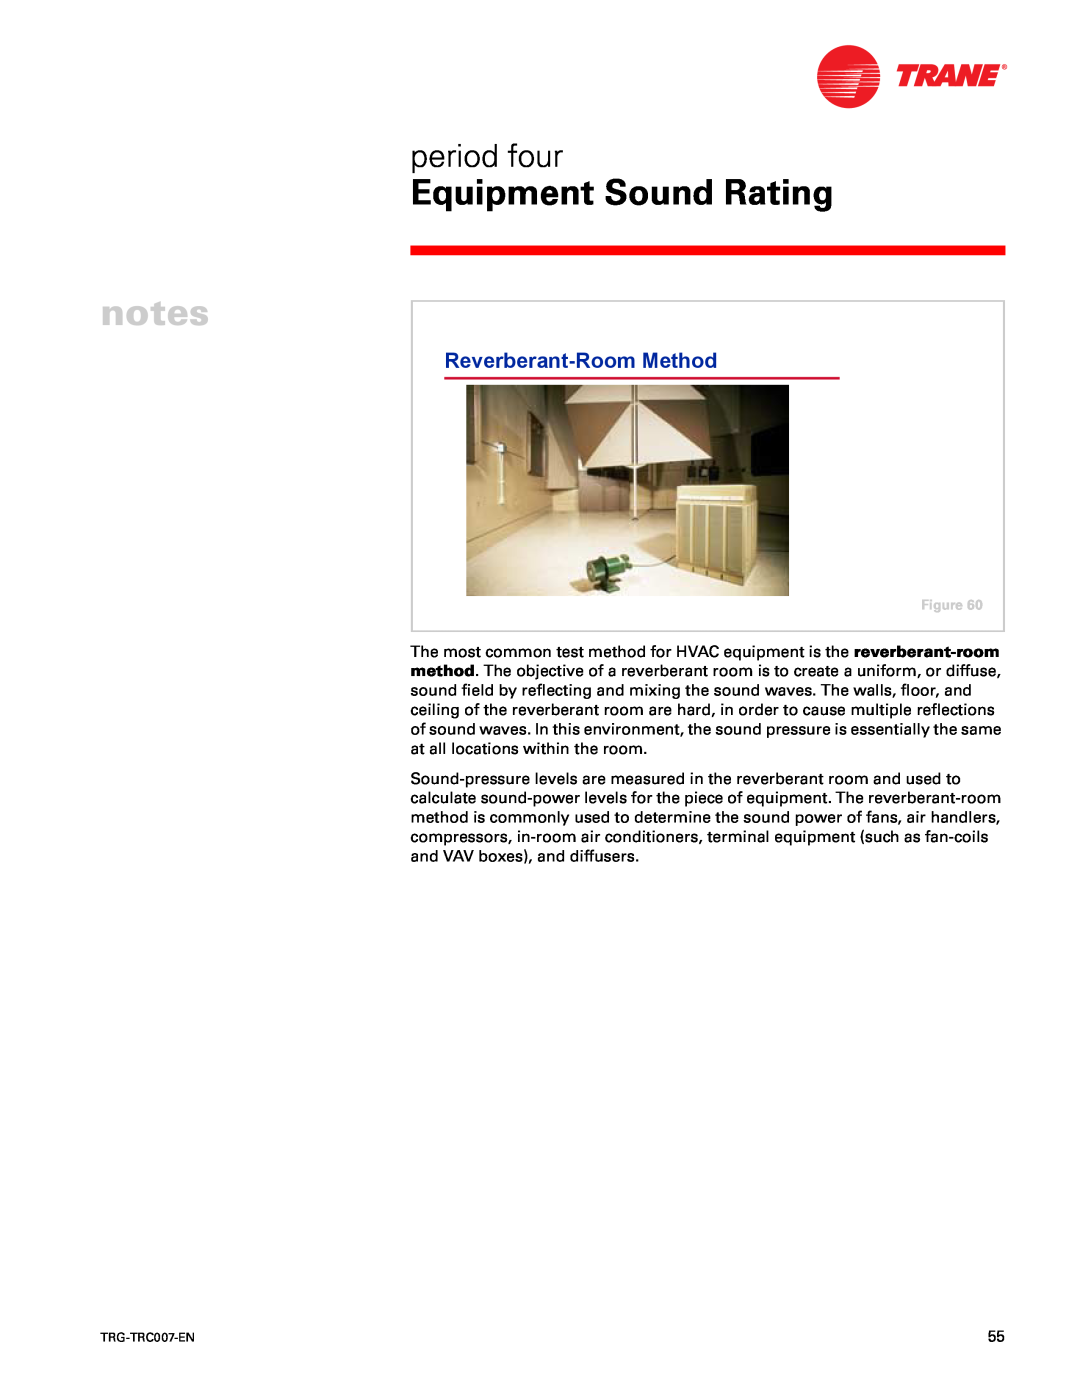 Trane TRG-TRC007-EN manual Reverberant-RoomMethod, Equipment Sound Rating, period four 